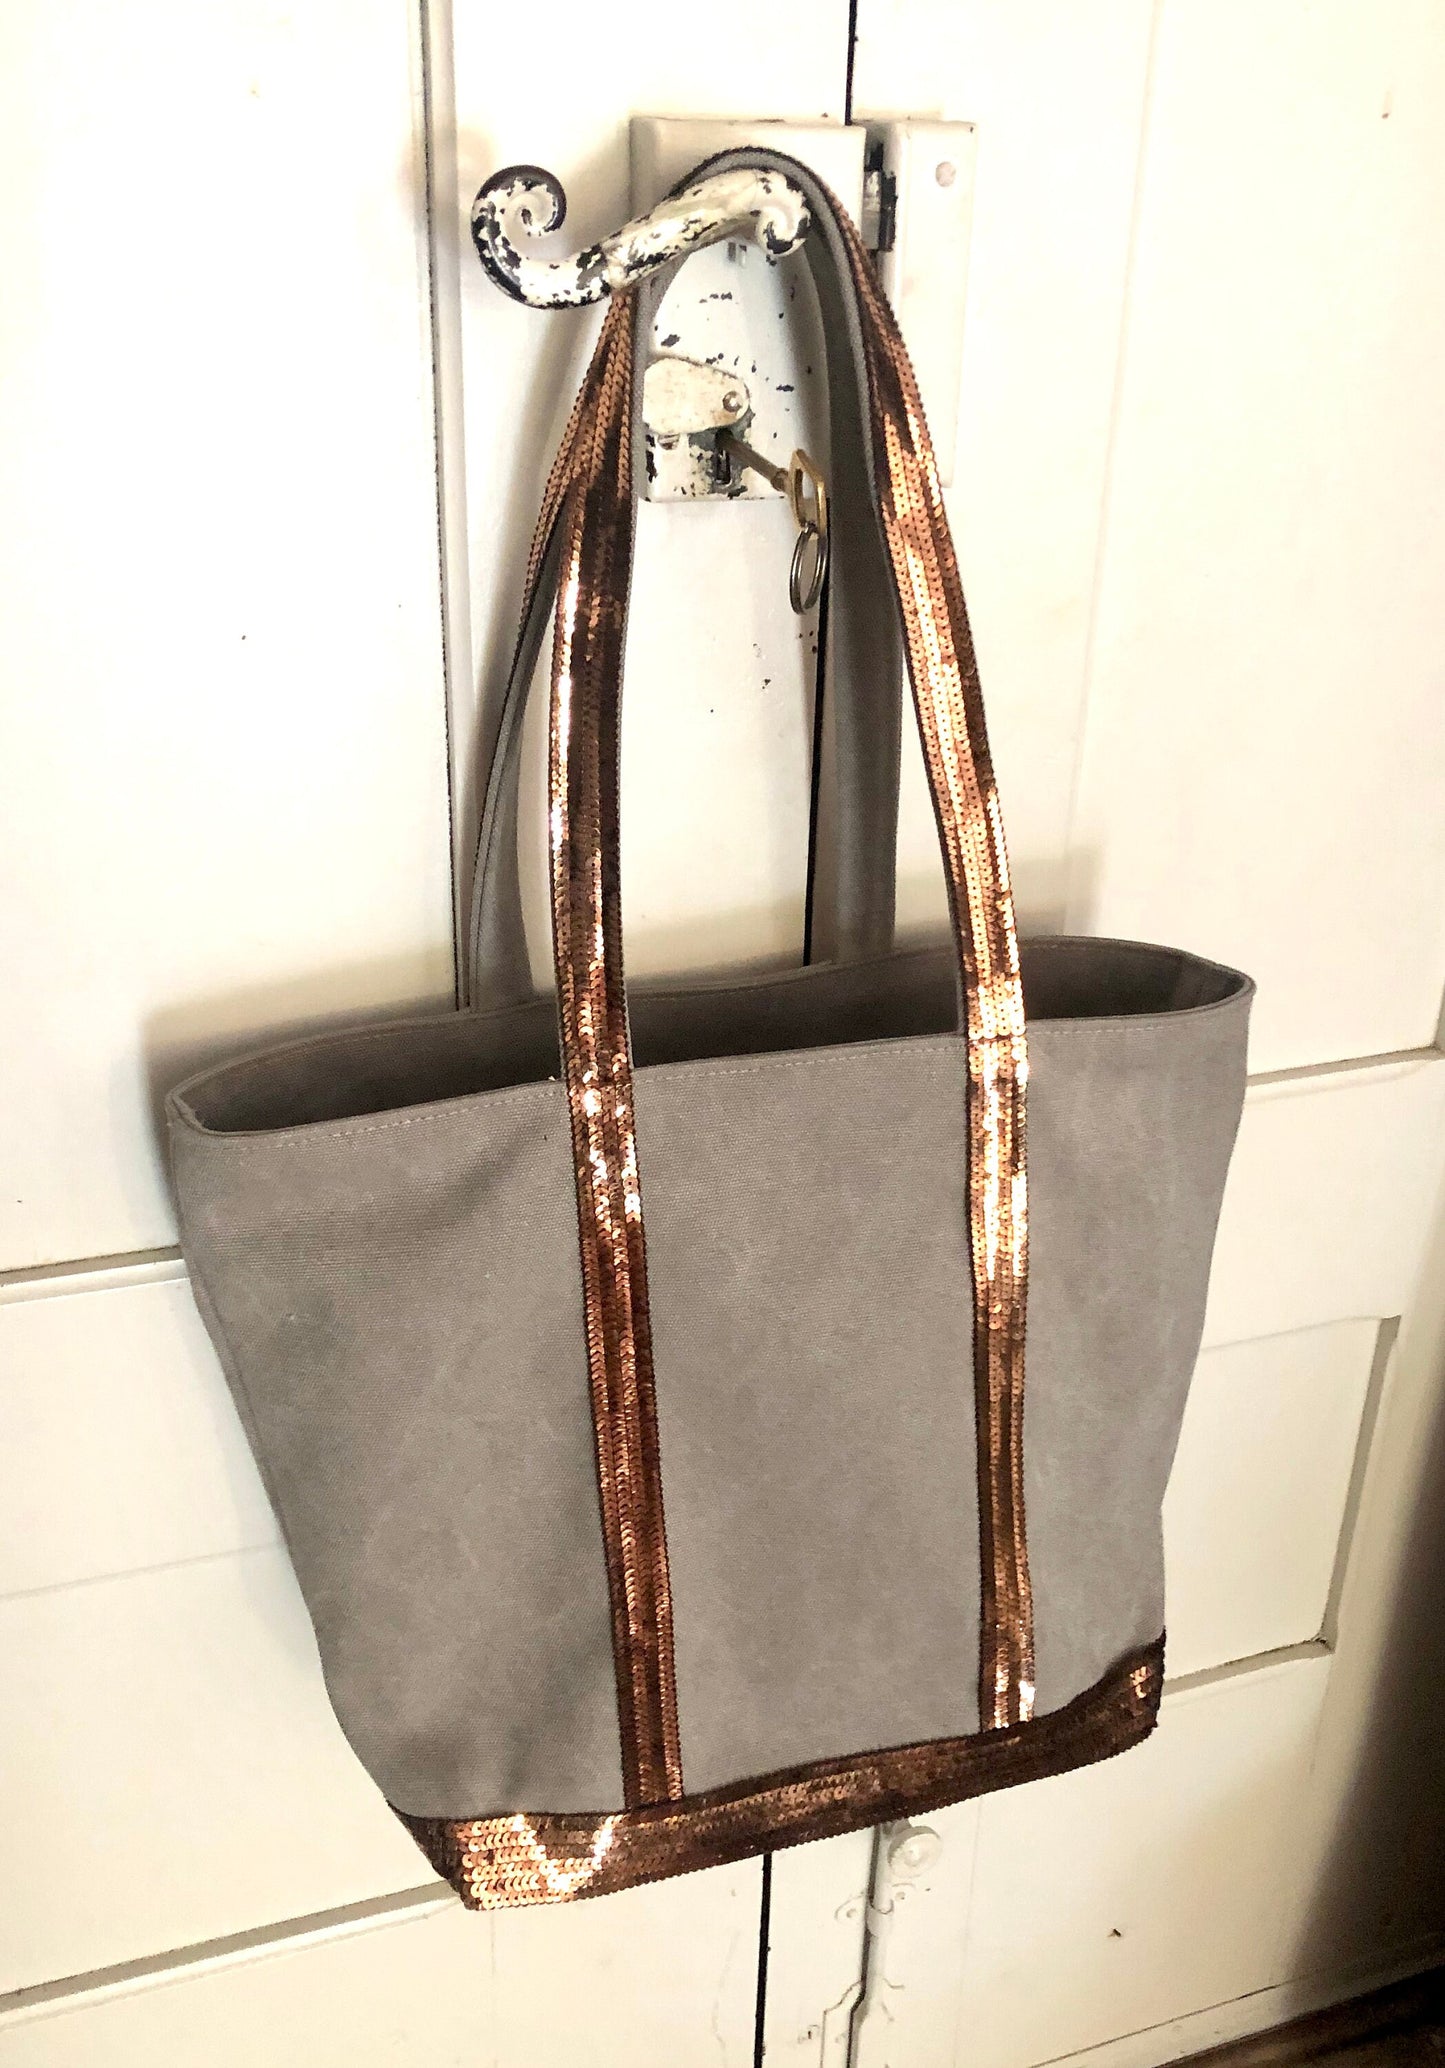 Cotton canvas tote bag with shoulder handles, taupe beige cotton canvas and bronze sequins